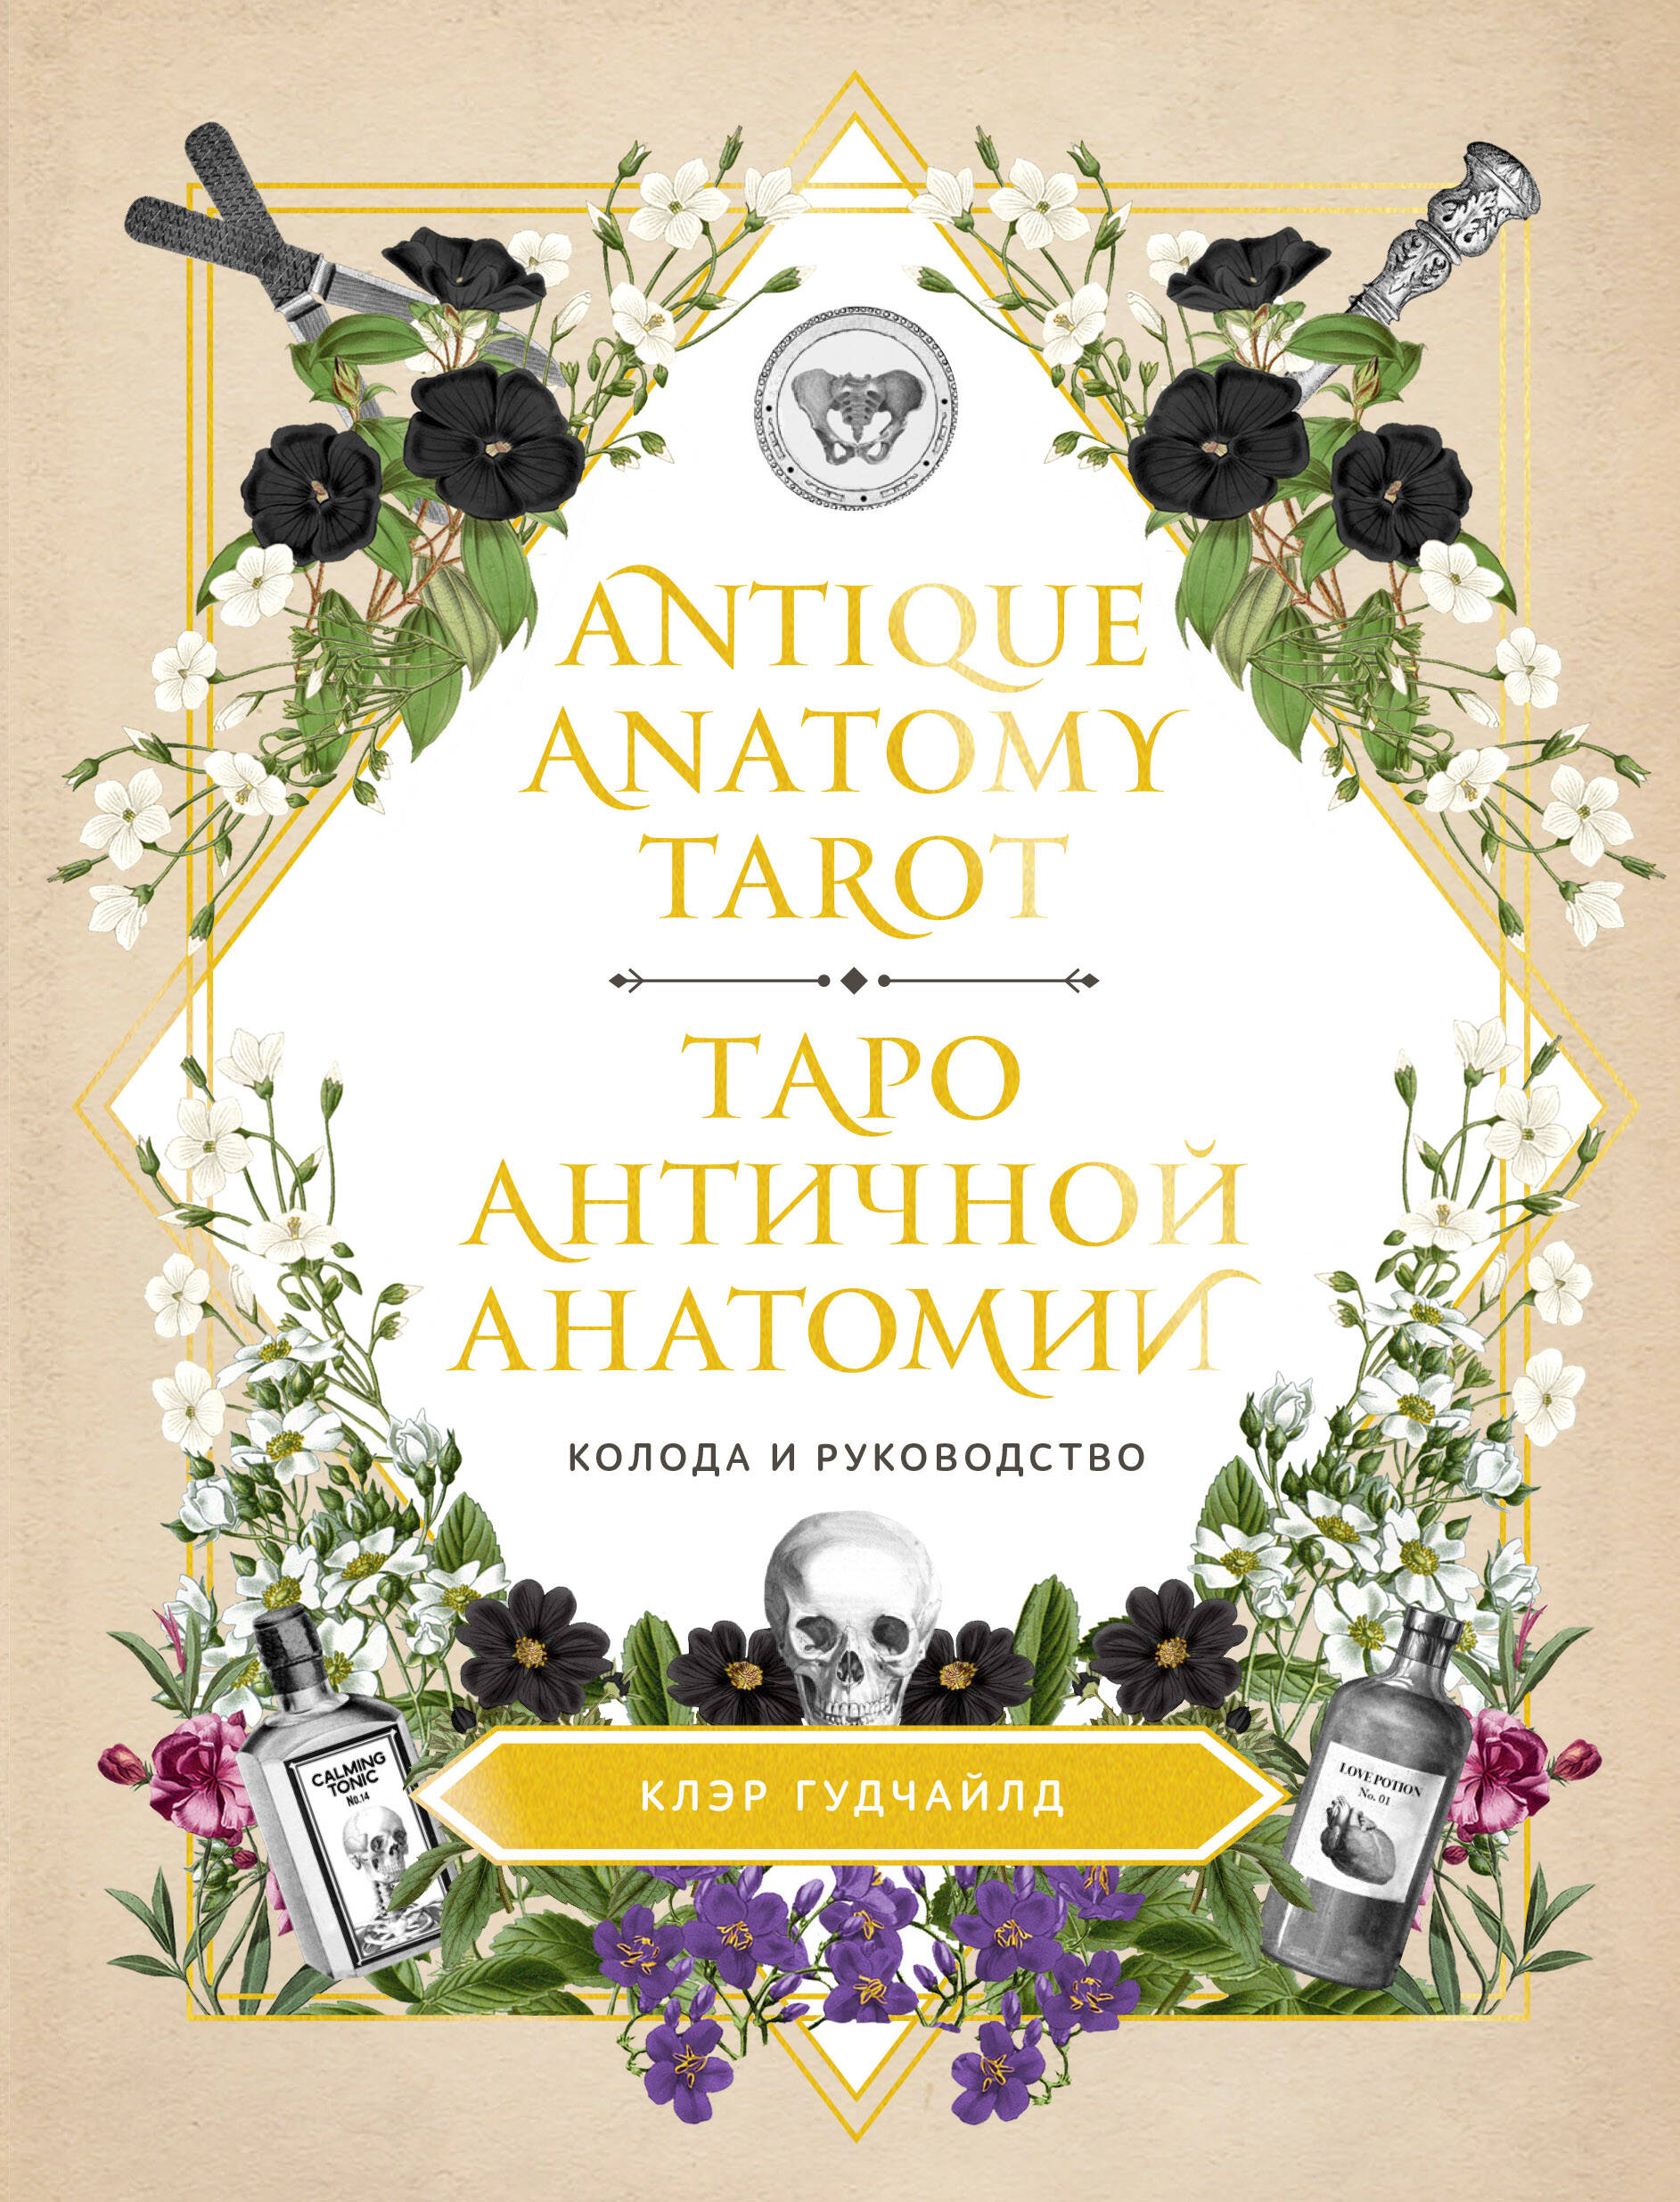 гудчайлд клэр antique anatomy tarot таро античной анатомии Гудчайлд Клэр Antique Anatomy Tarot. Таро античной анатомии